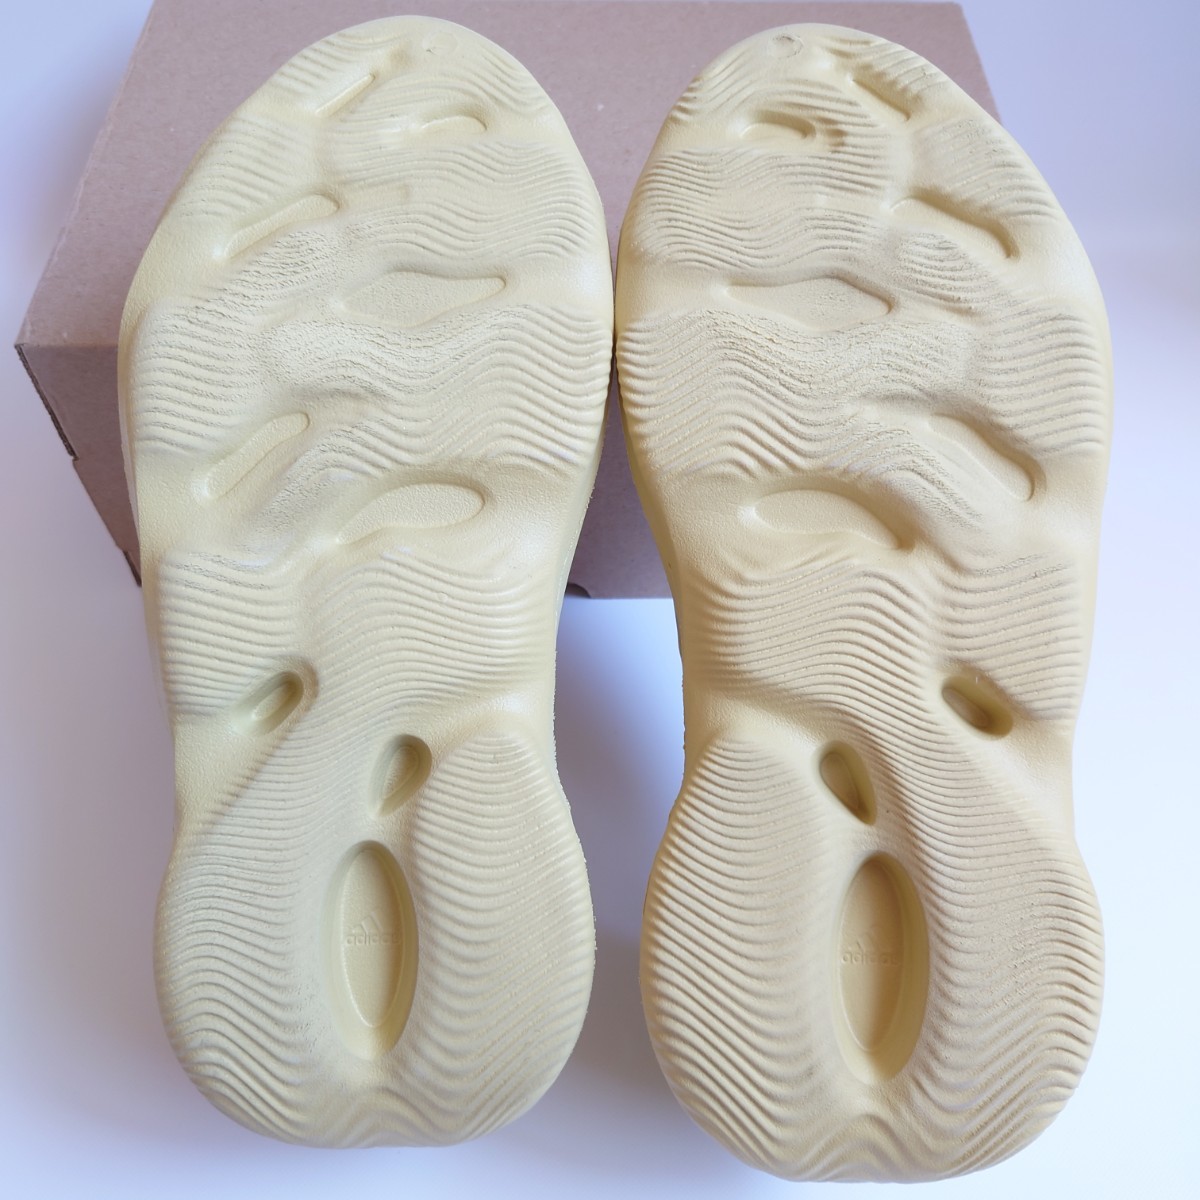  secondhand goods 29.5cm adidas YEEZY Foam Runner Sulfur Adidas Easy foam Runner monkey fur GV6775